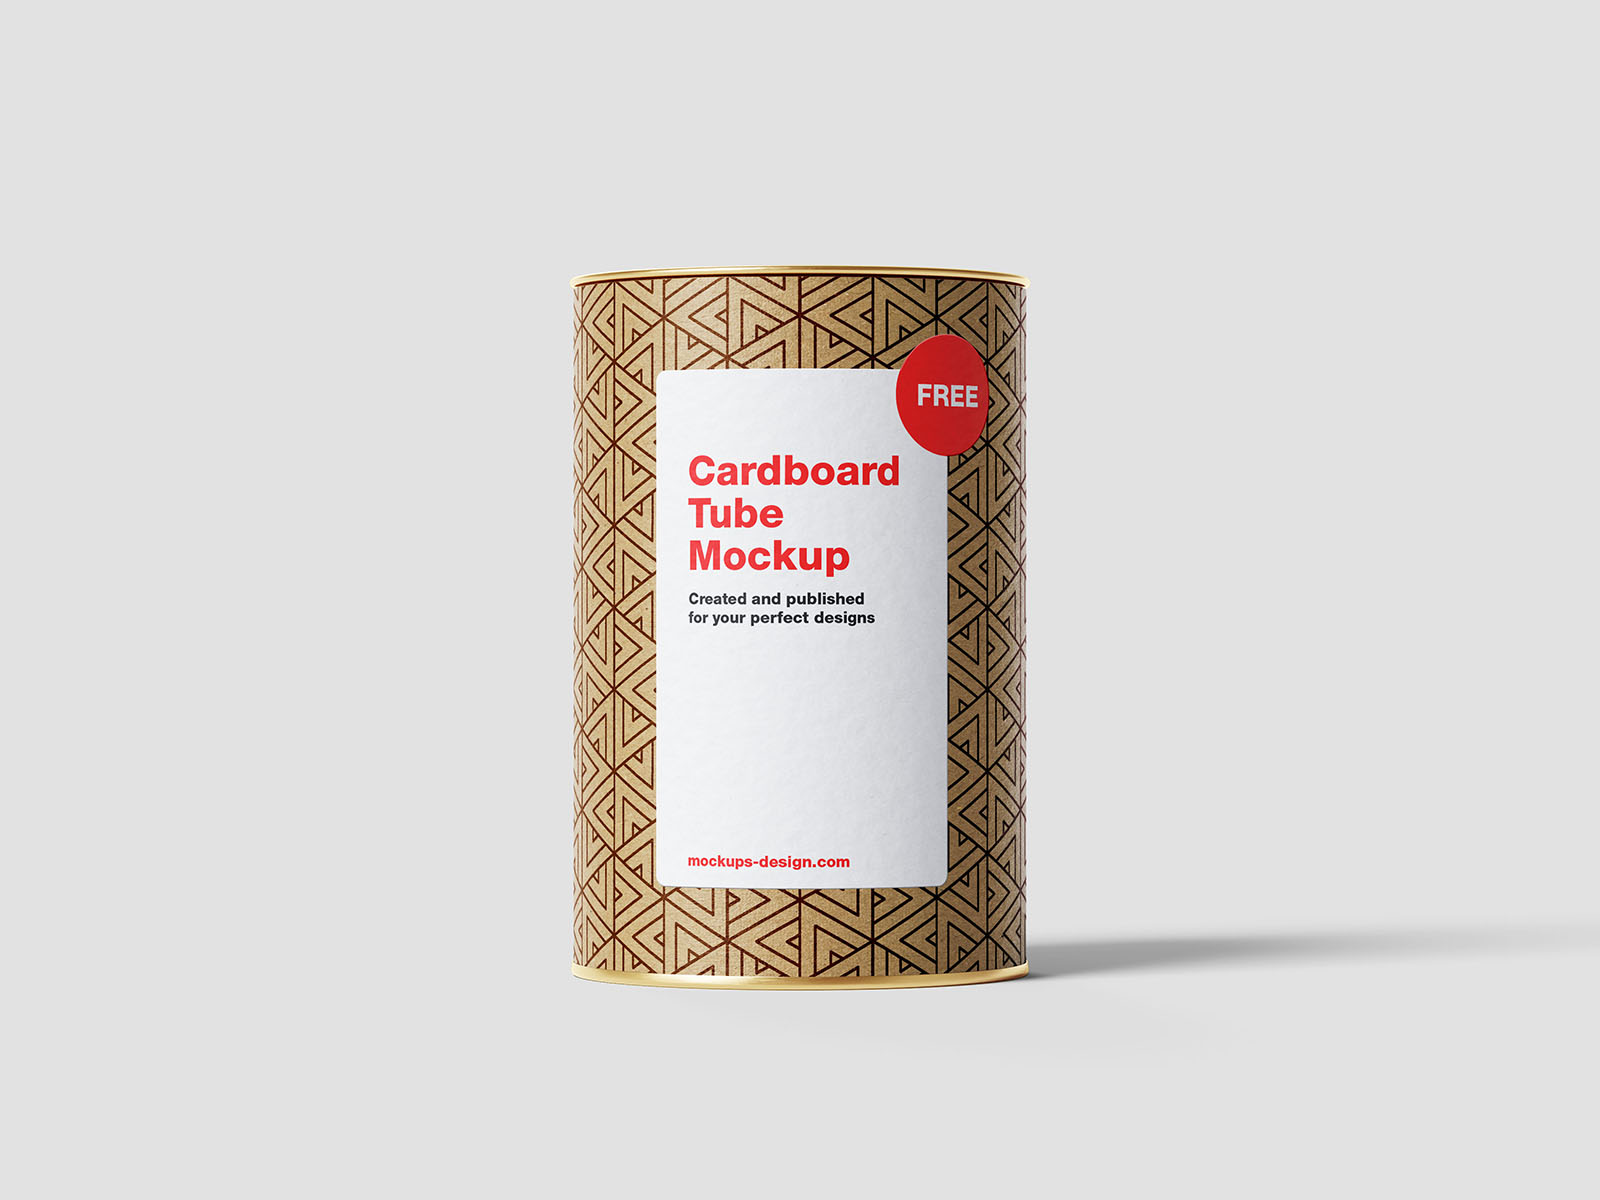 Cardboard tube mockup